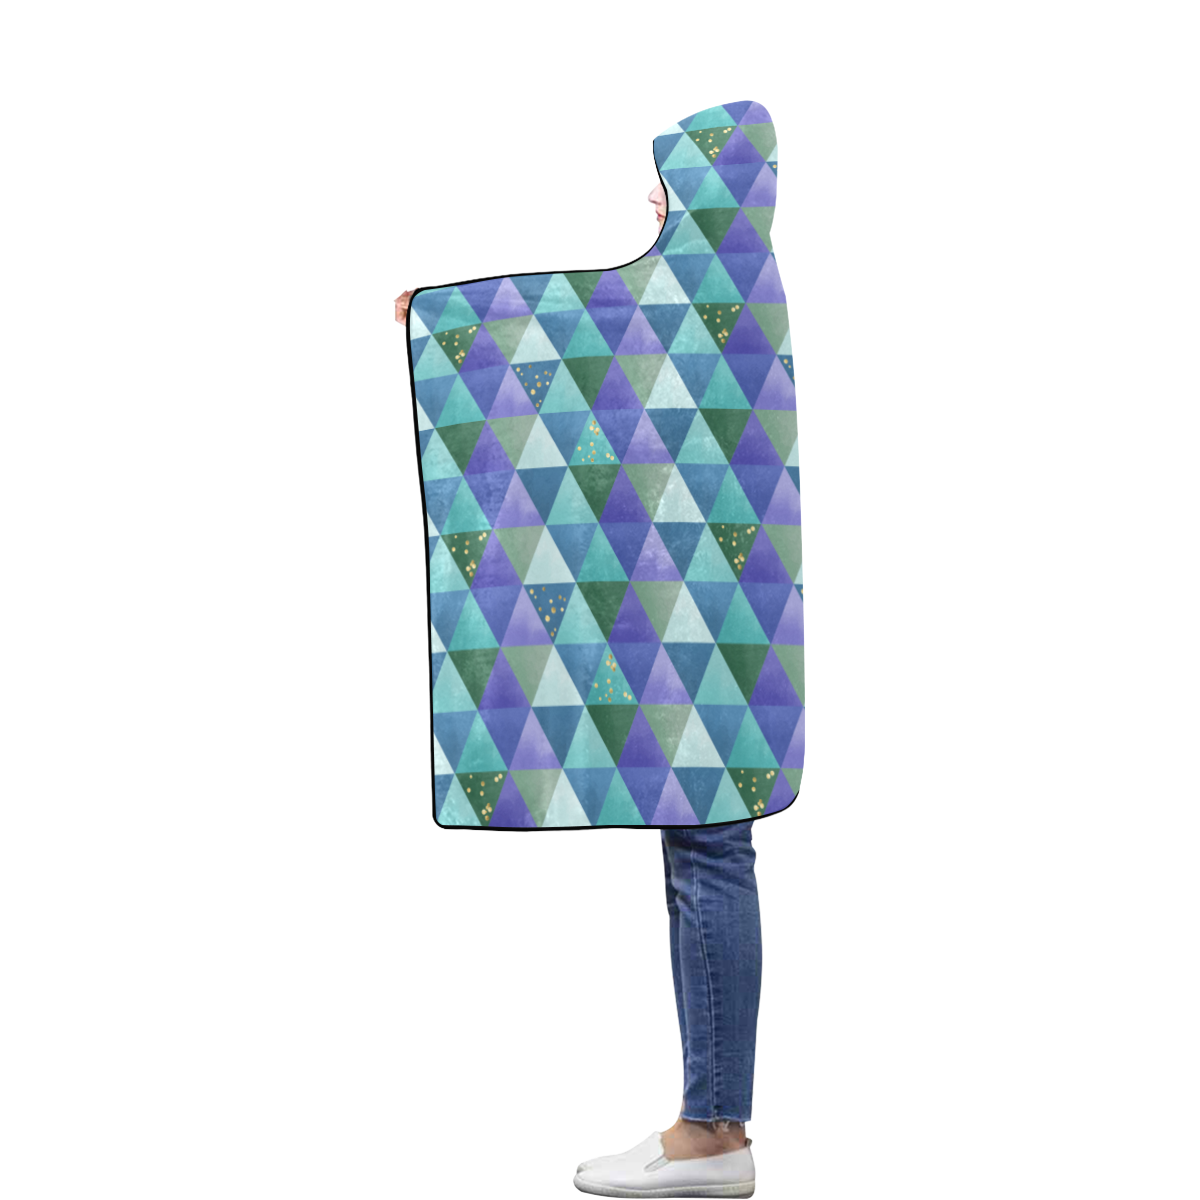 Triangle Pattern - Blue Violet Teal Green Flannel Hooded Blanket 40''x50''